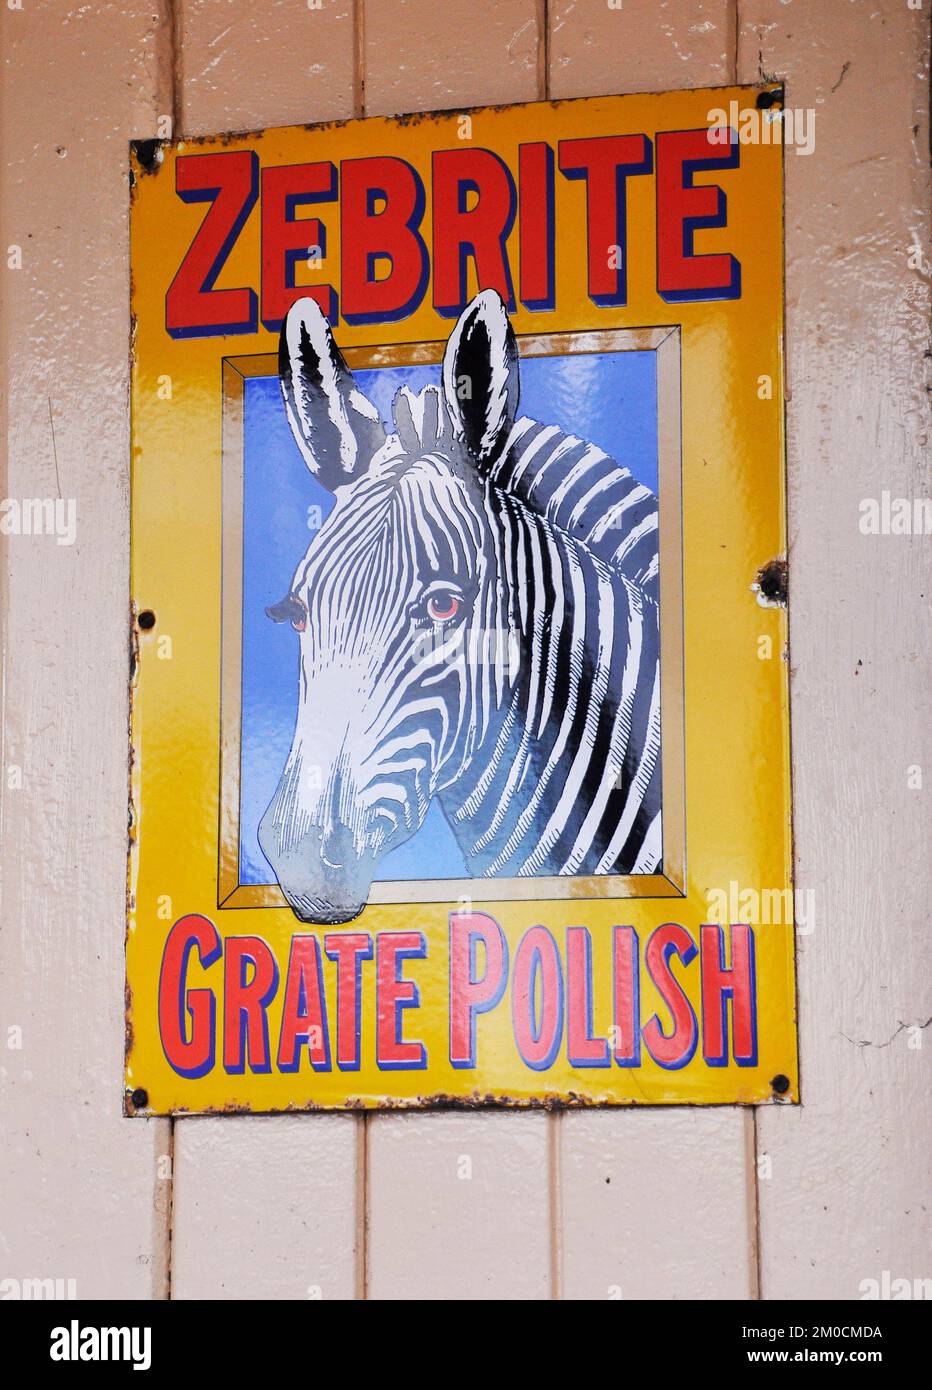 Enamelled metal sign, advertising Zebra grate polish photographed at Tenterden railway station in Kent,England, UK Stock Photo